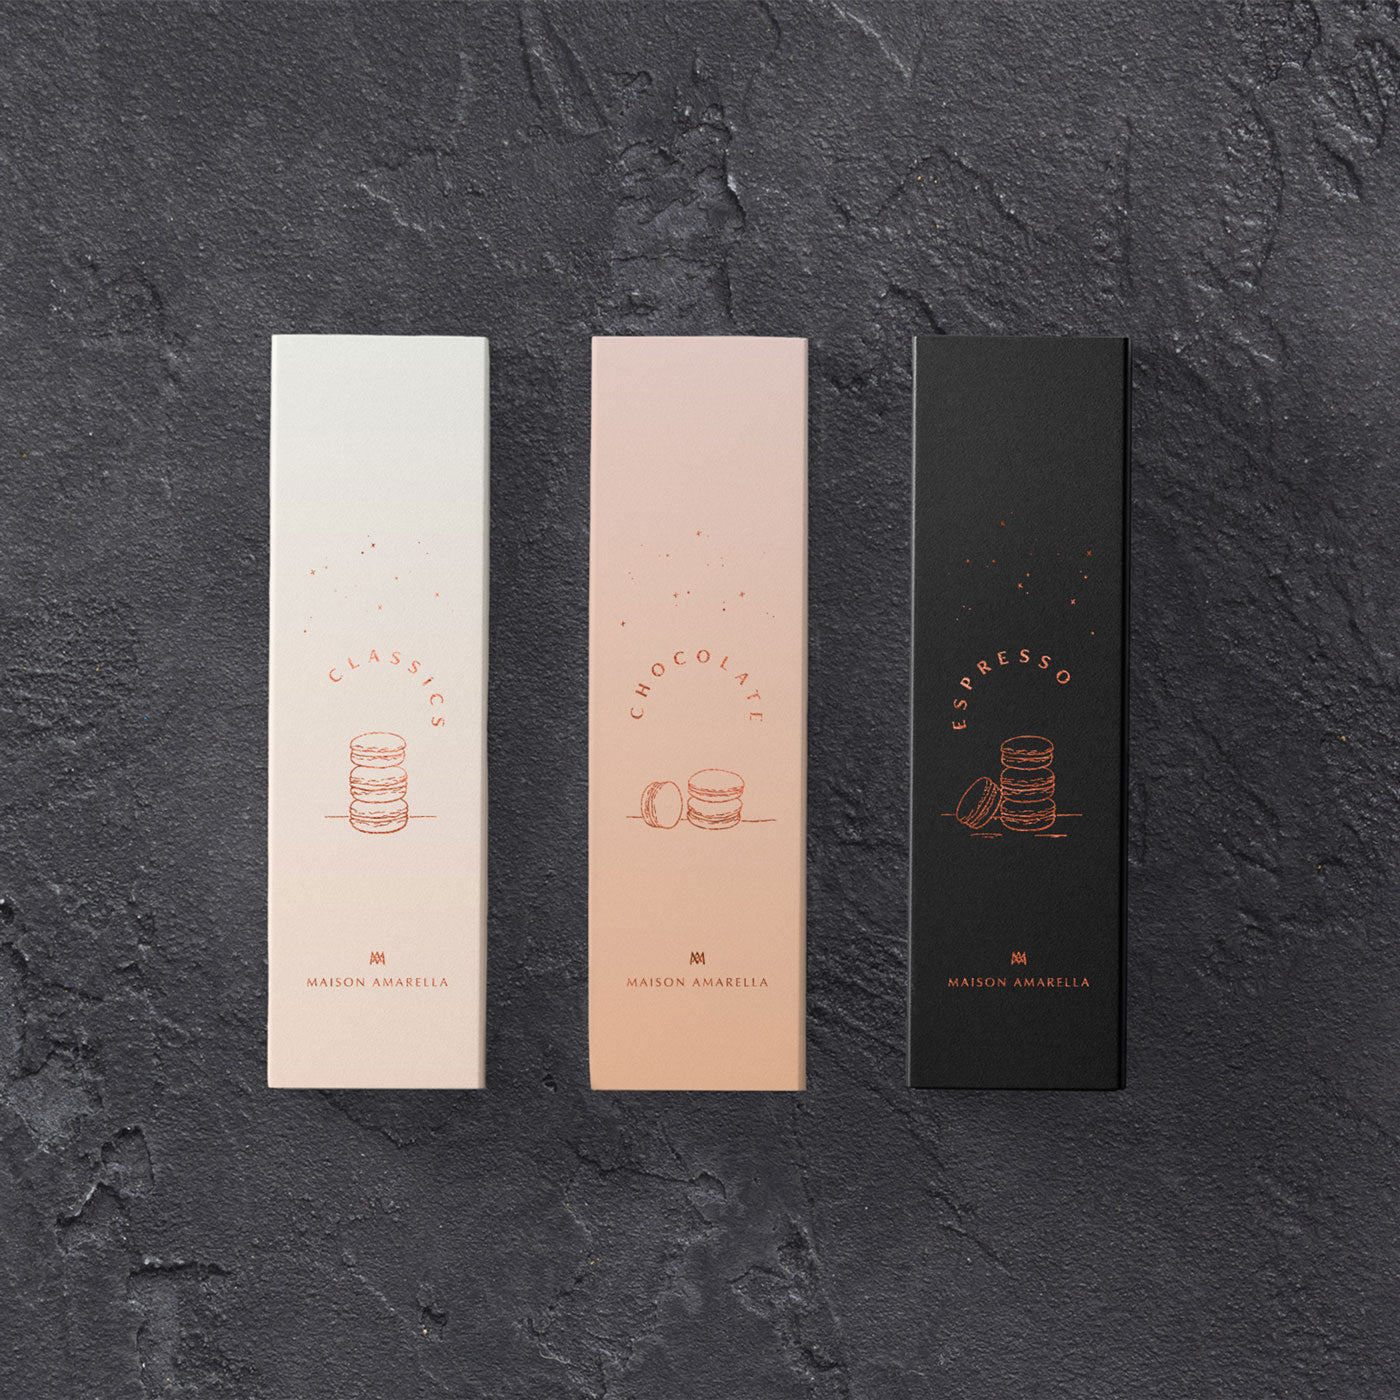 Karolina Król Studio elegant minimalist macaron packaging design